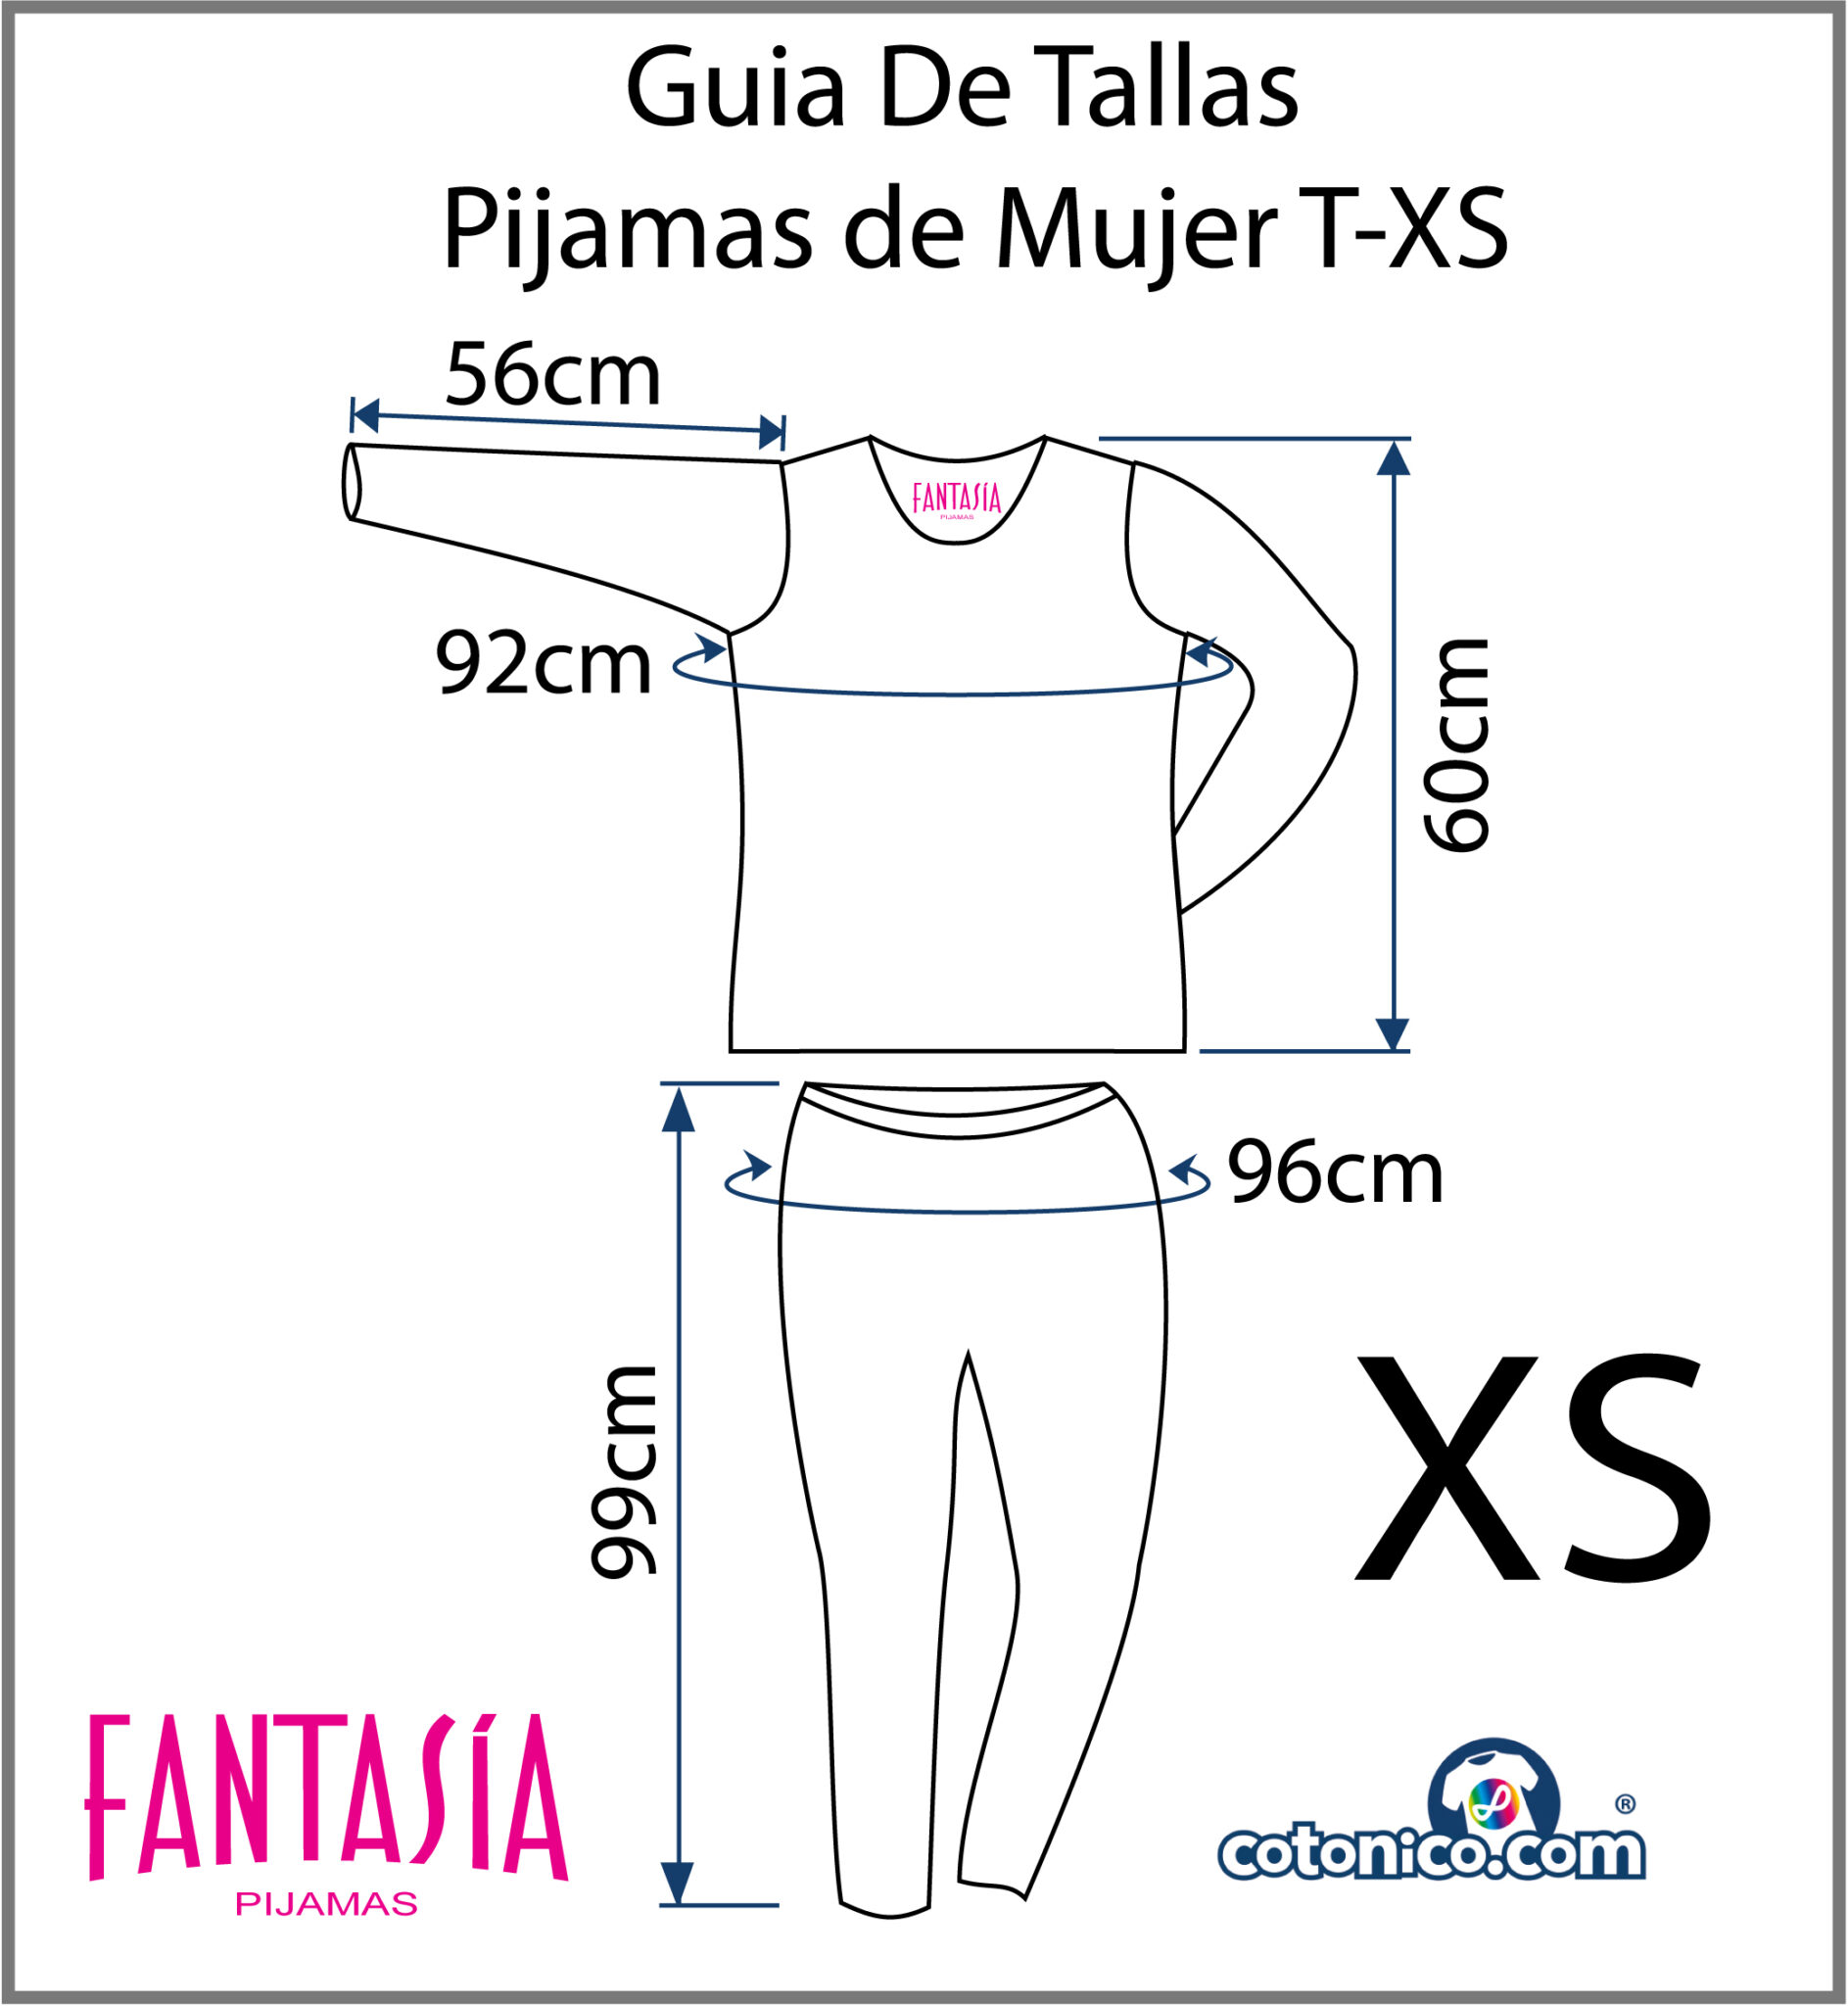 Guia-De-Tallas-Pijamas-De-Mujer-XS